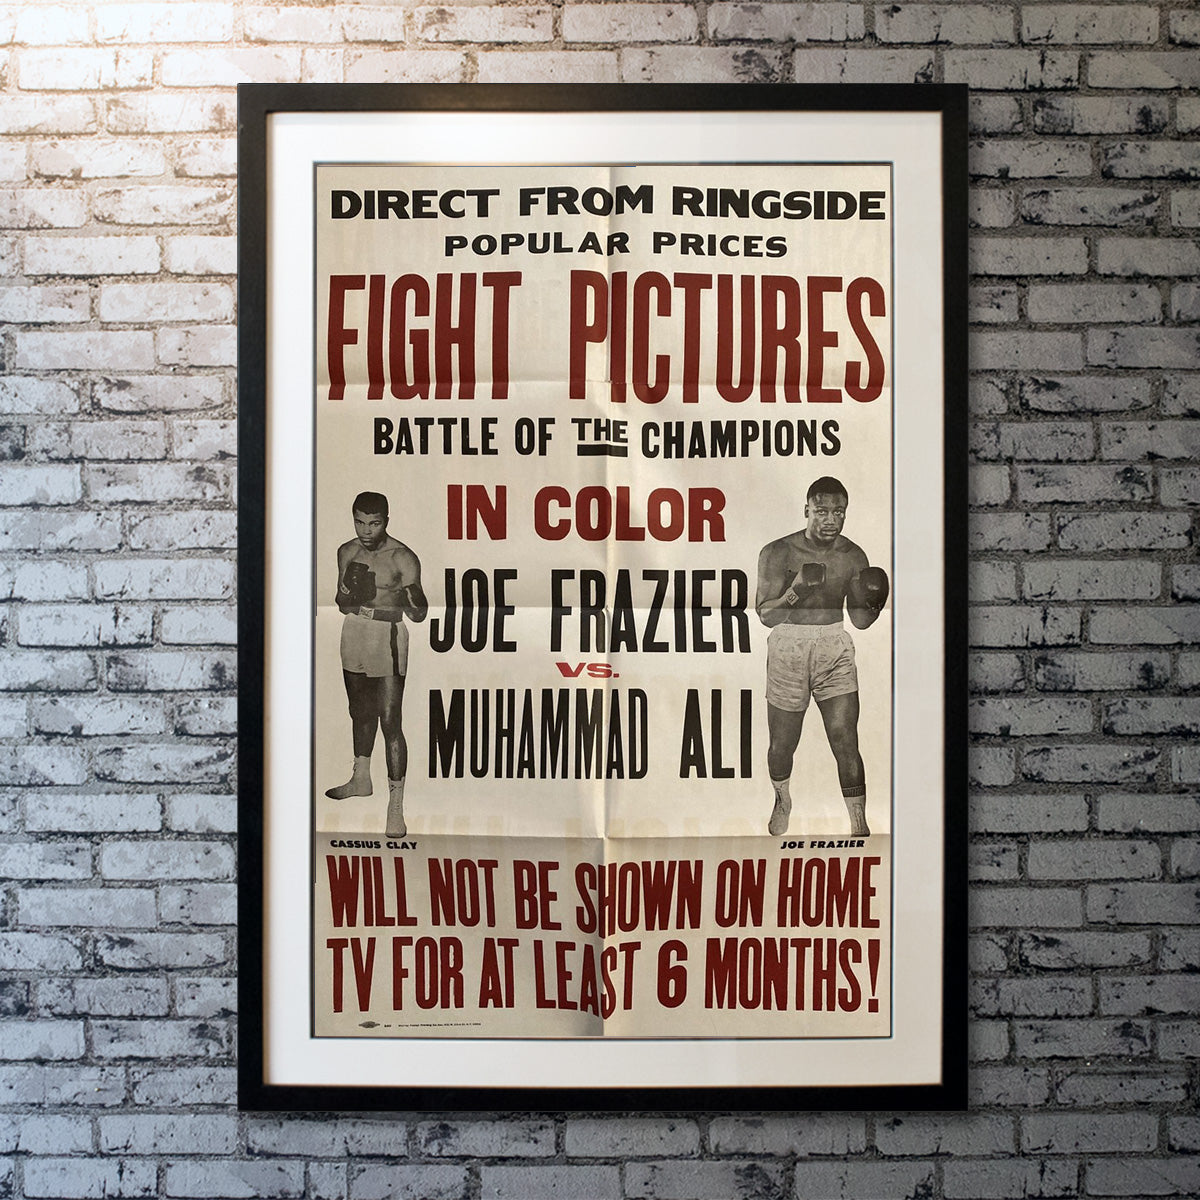 Joe Frazier Vs. Muhammad Ali (1971)